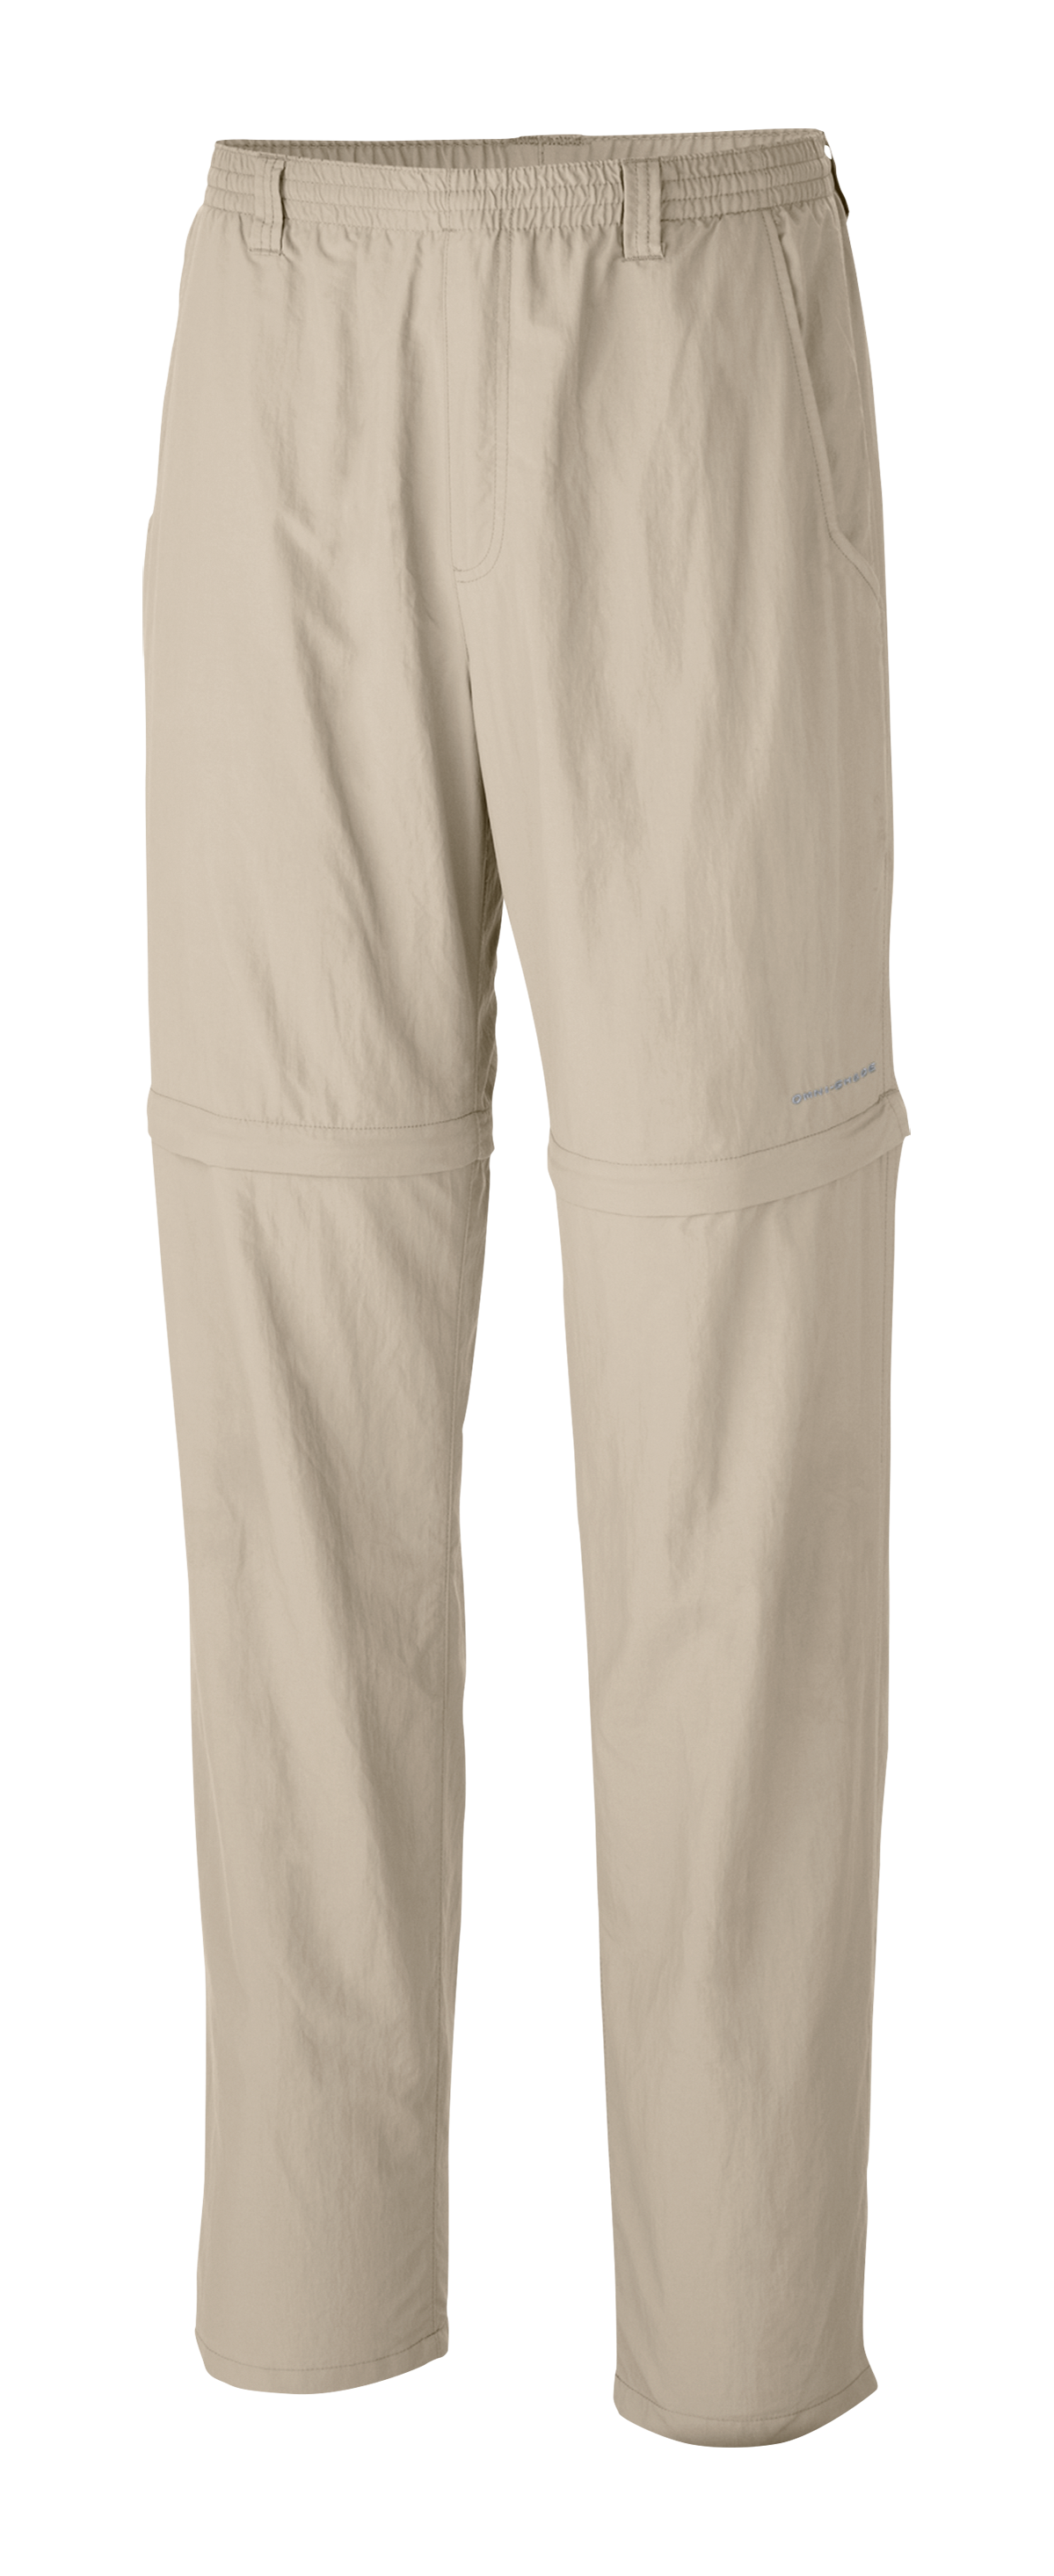 Columbia PFG Convertible performance Fishing gear Pants/Shorts Men's  Elastic XXL